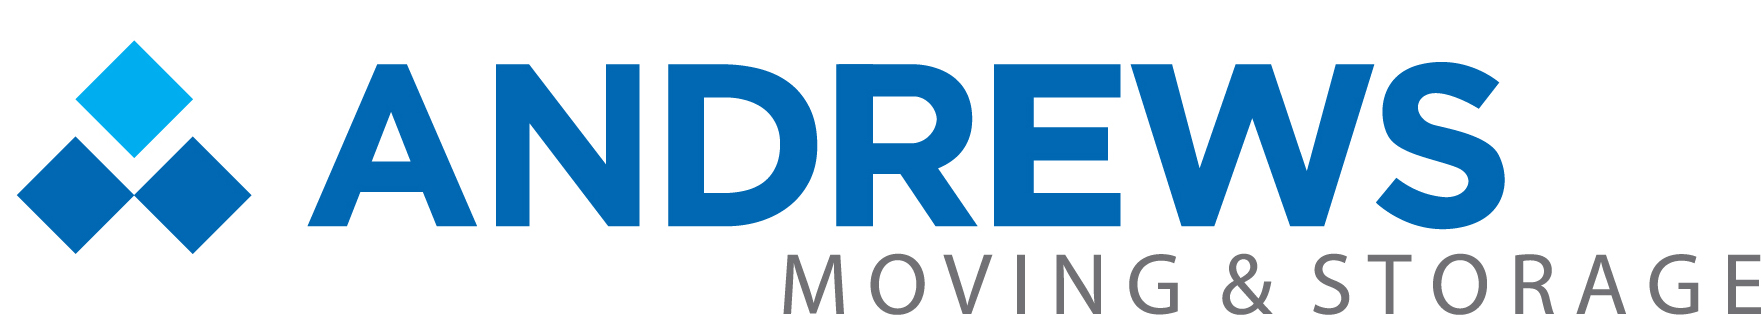 Andrews Moving & Storage Company Logo